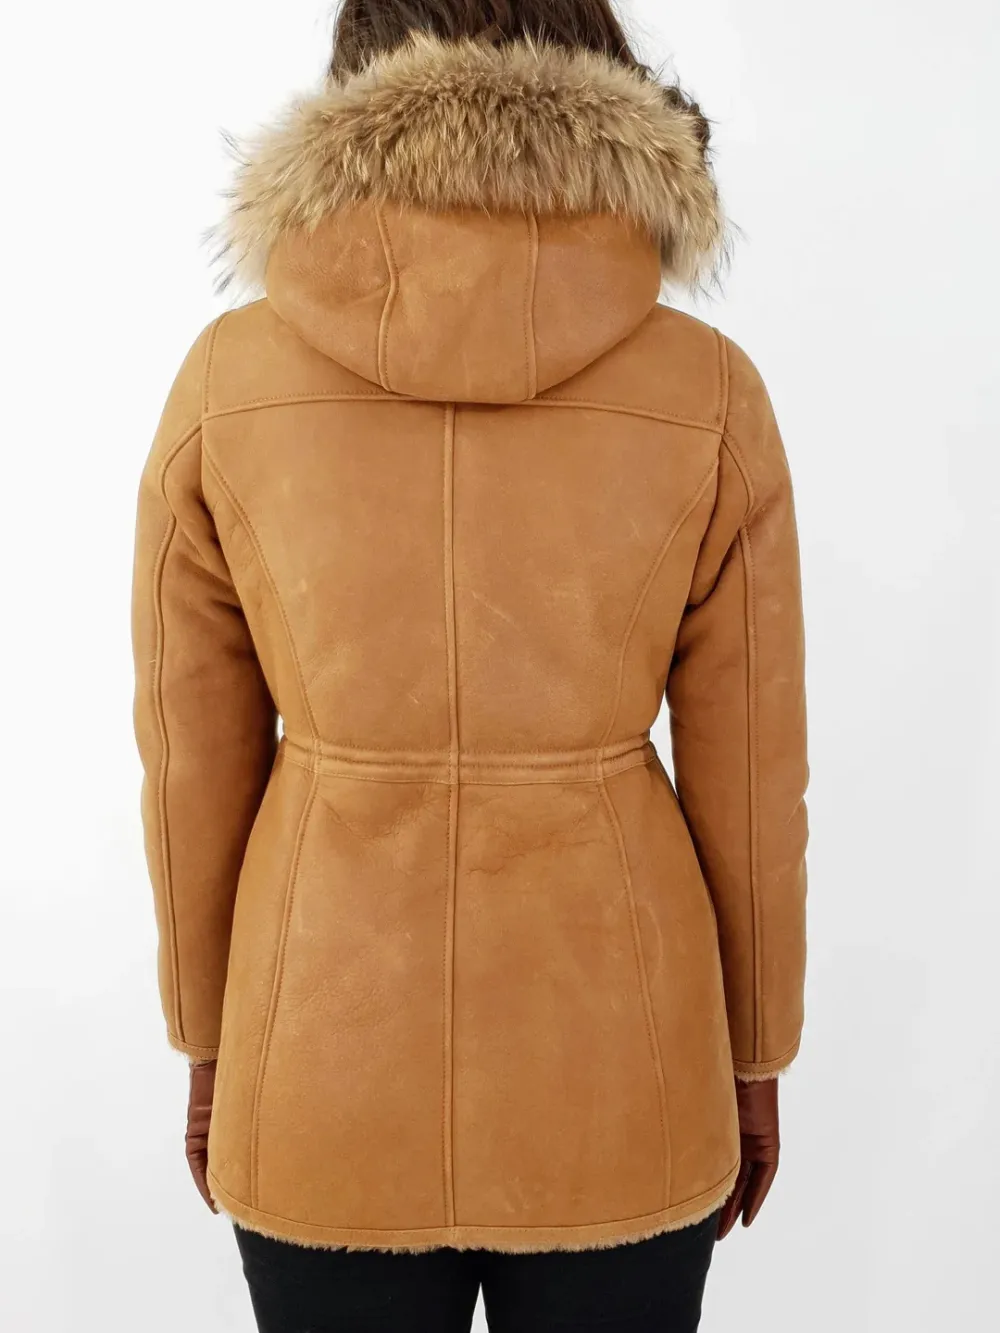 Woolen sheepskin drawstring waist double sided jacket jacket jacket